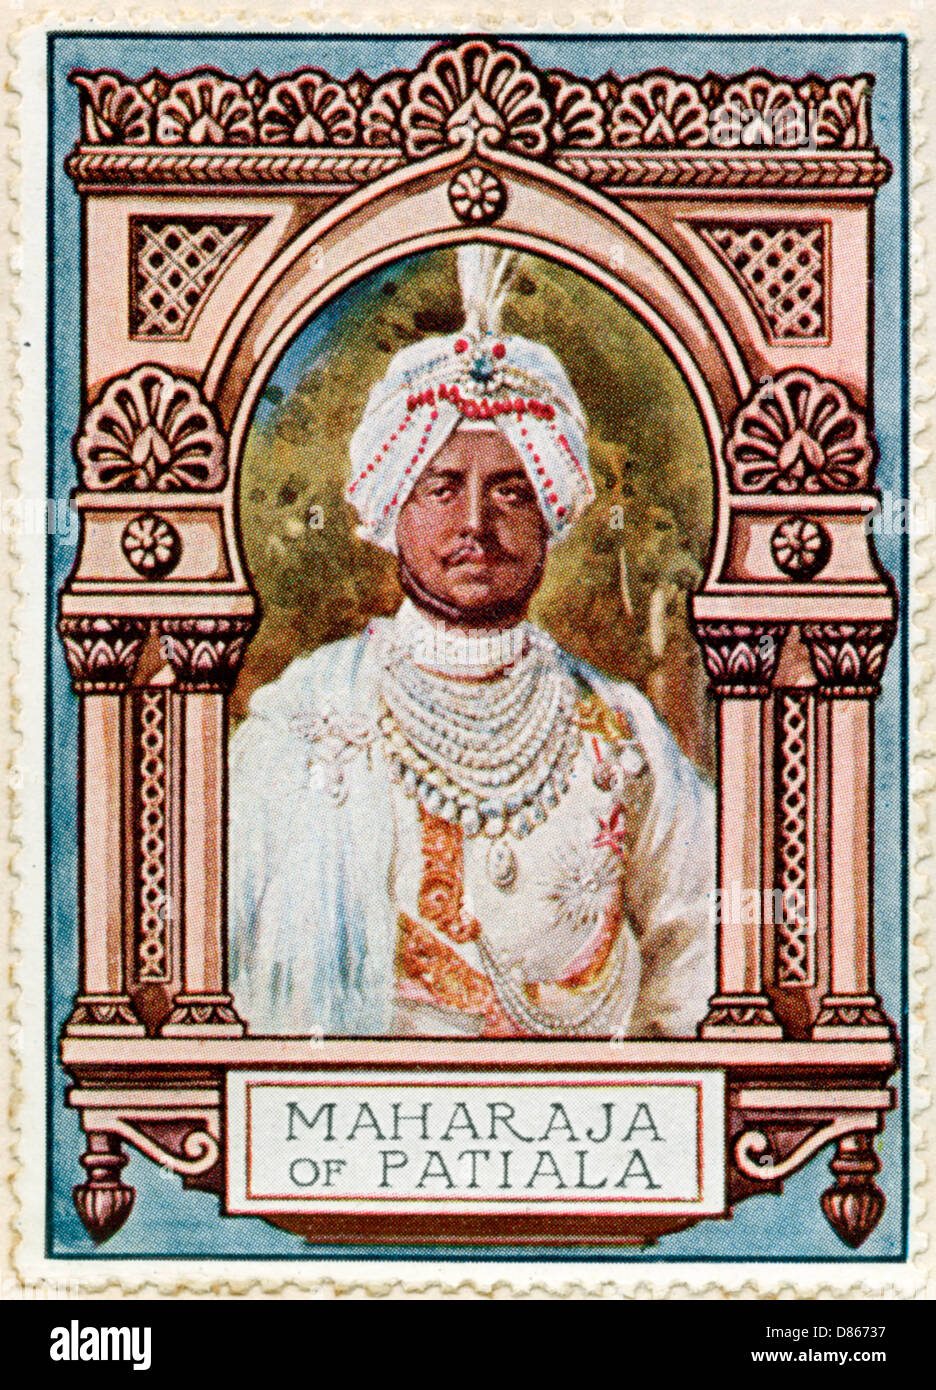 Maharaja of Patiala / Stamp Stock Photo